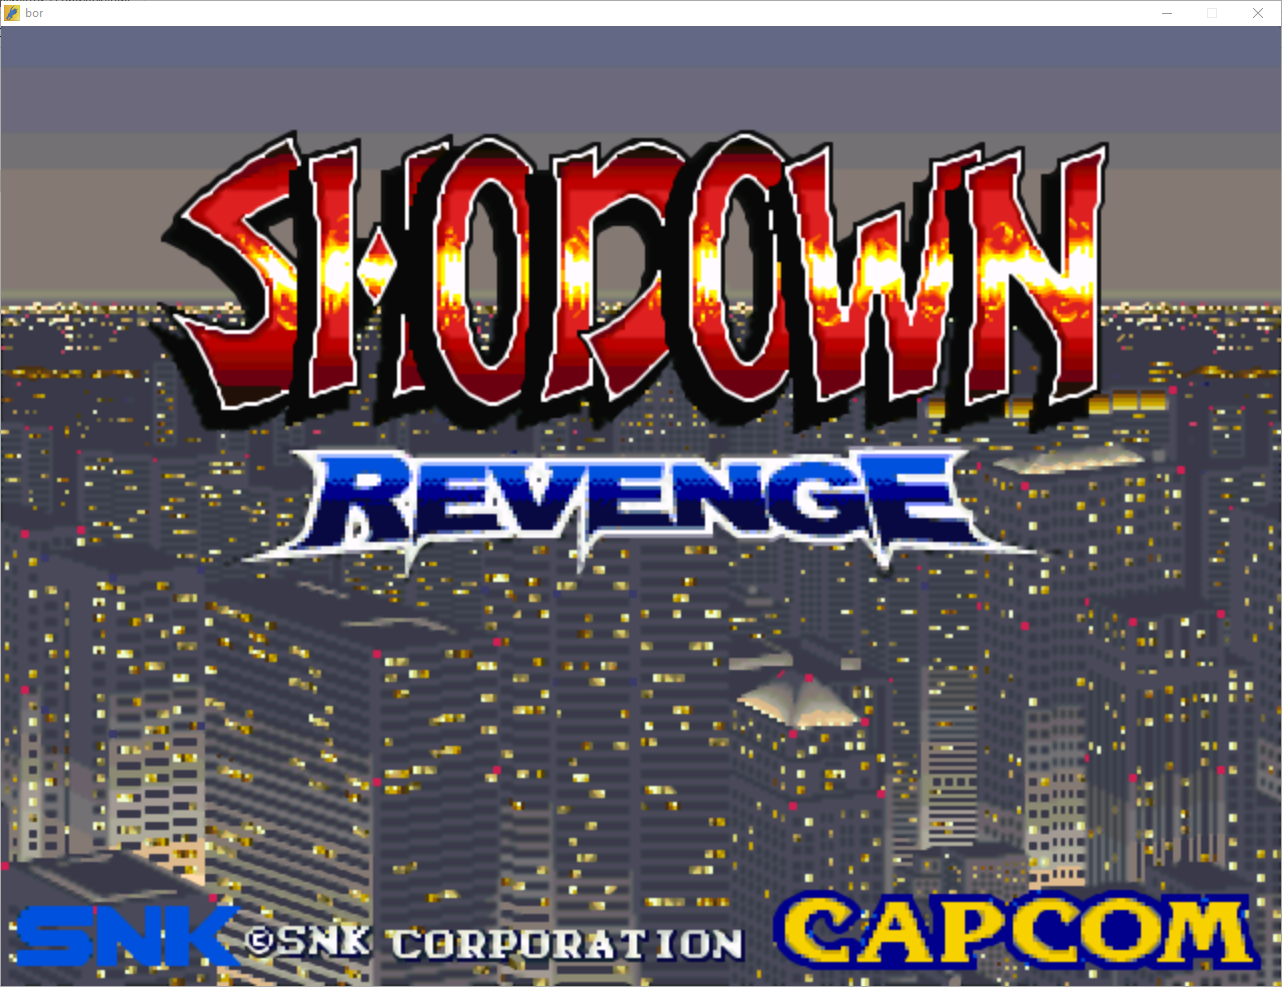 Showdown Revenge - OpenBoR Demo